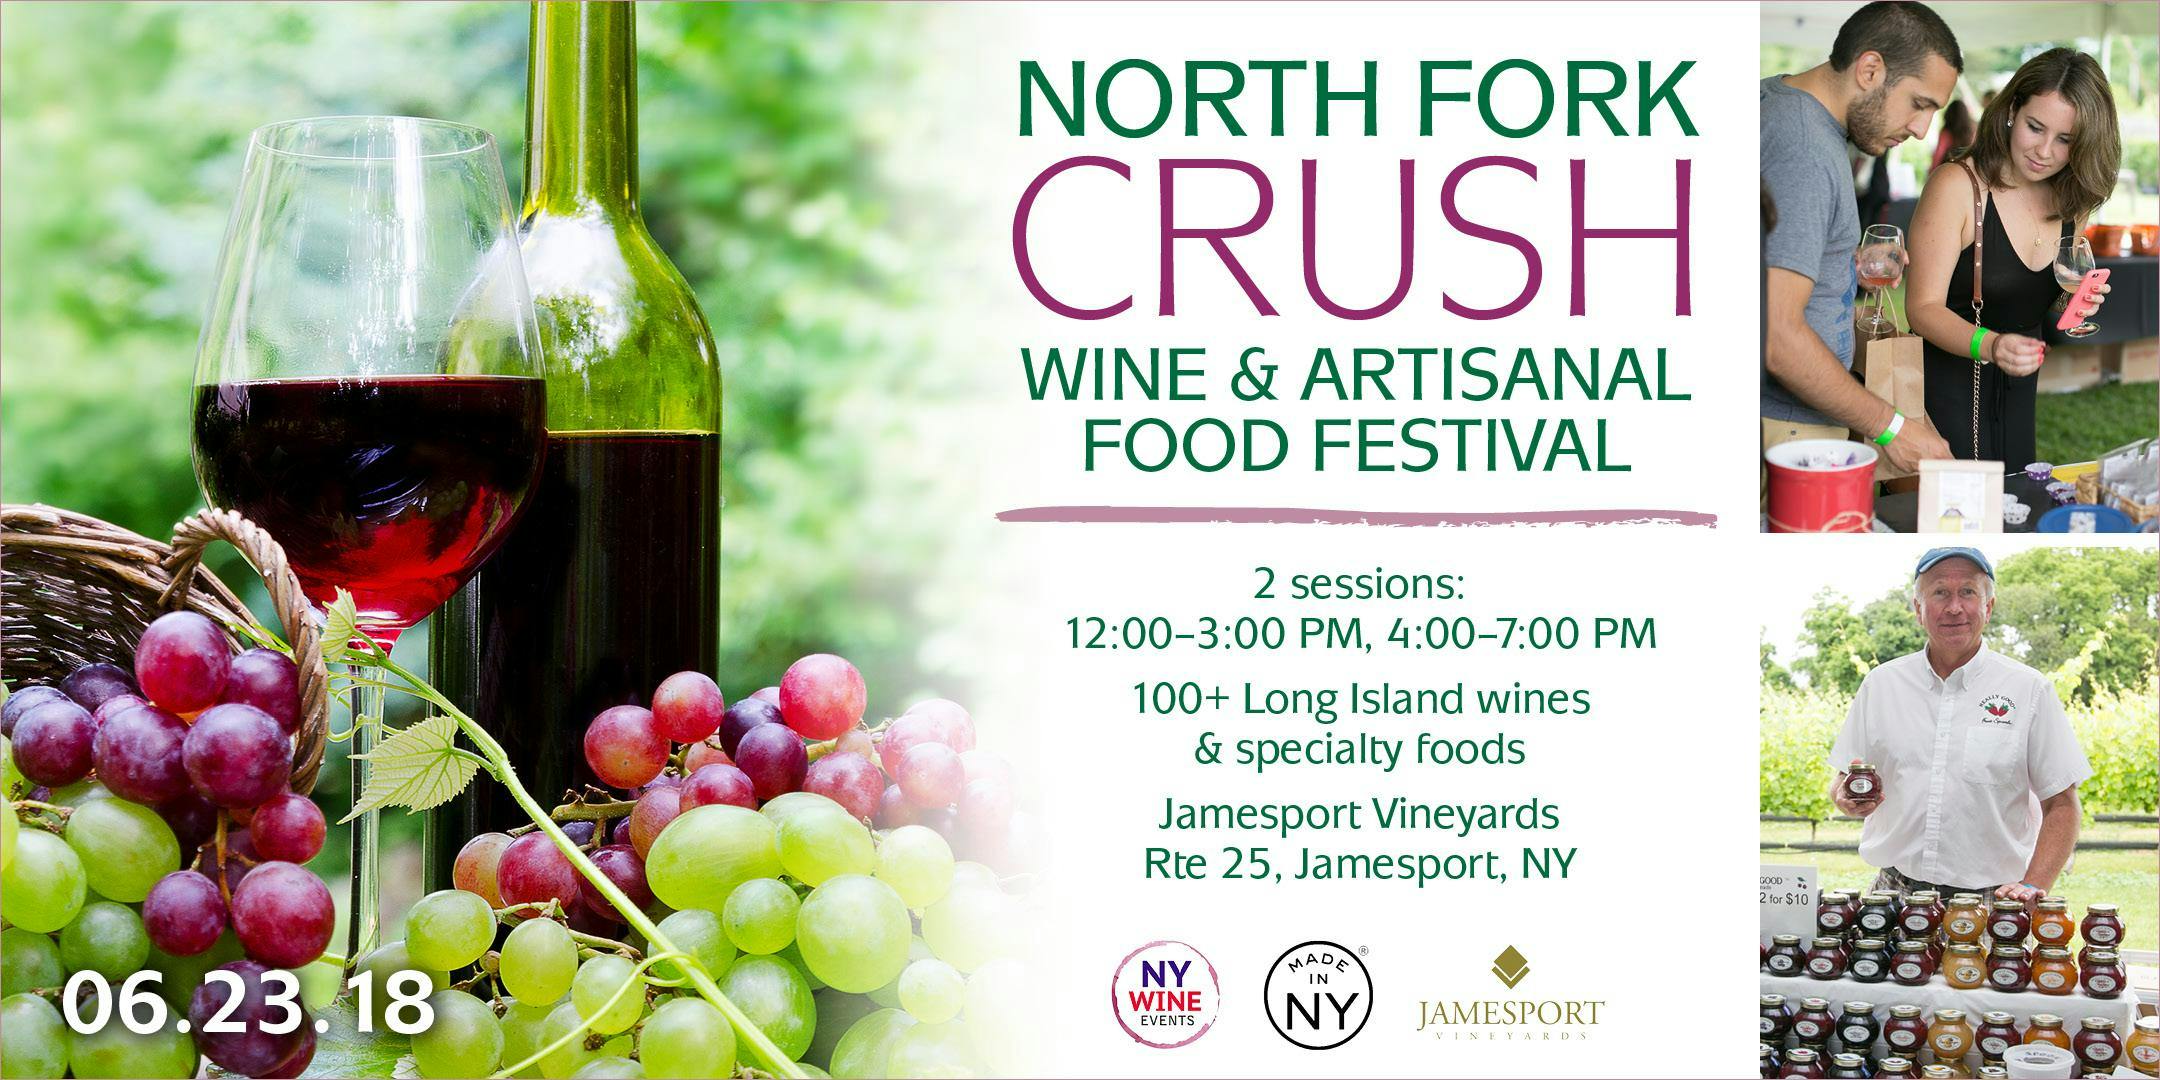 North Fork Crush Wine & Artisanal Food Festival